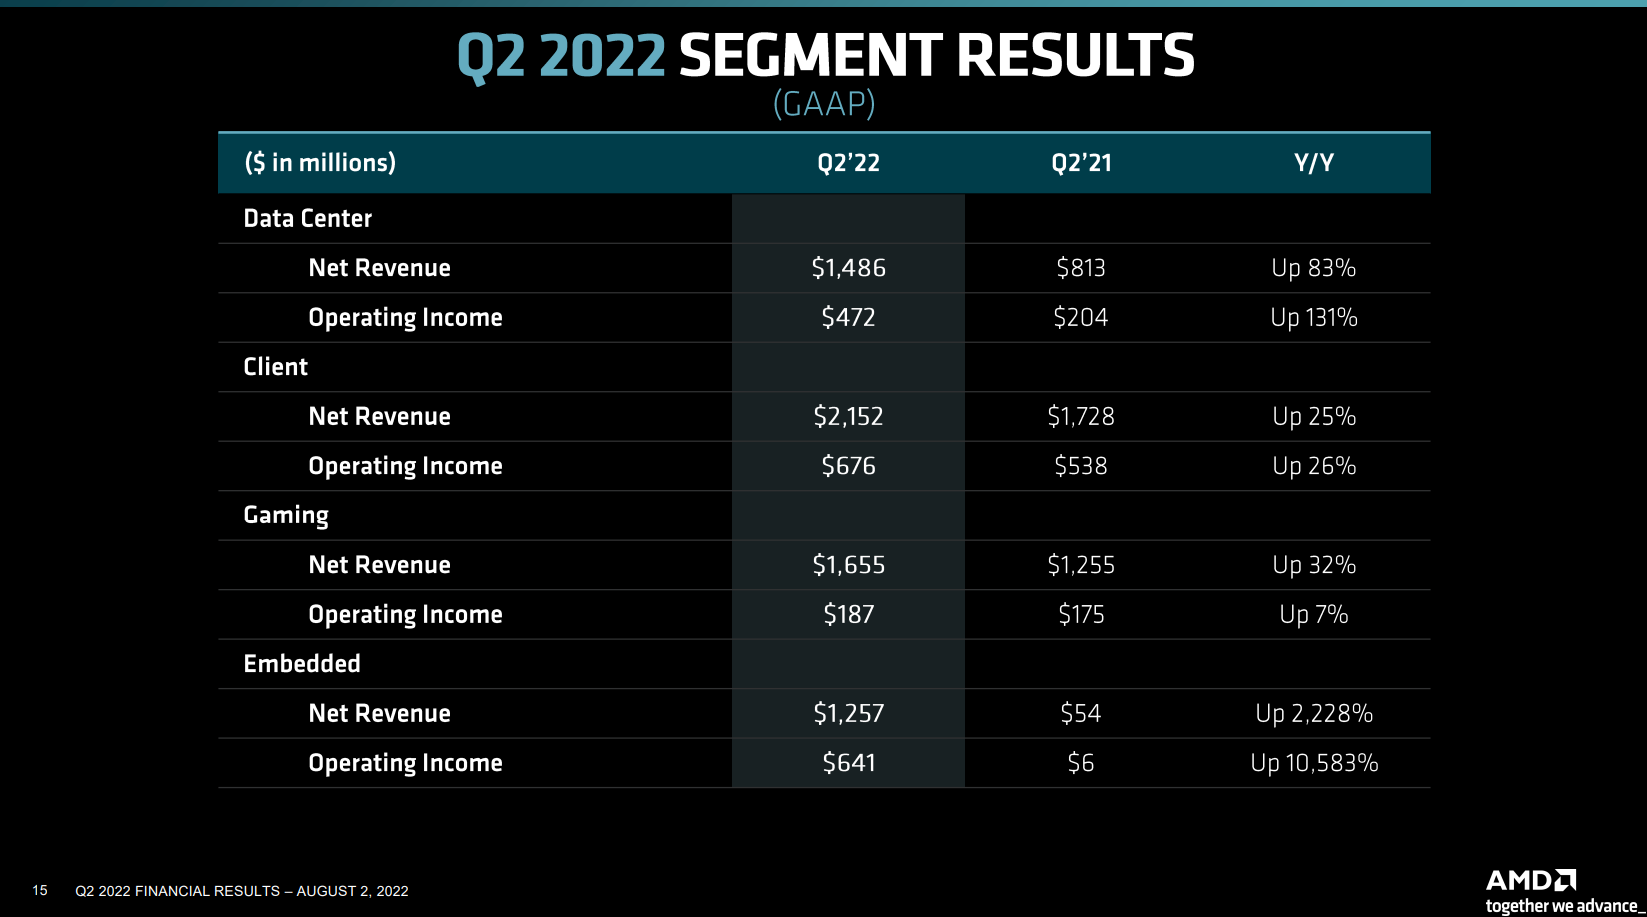 NVIDIA Announces Financial Results for Second Quarter Fiscal 2023